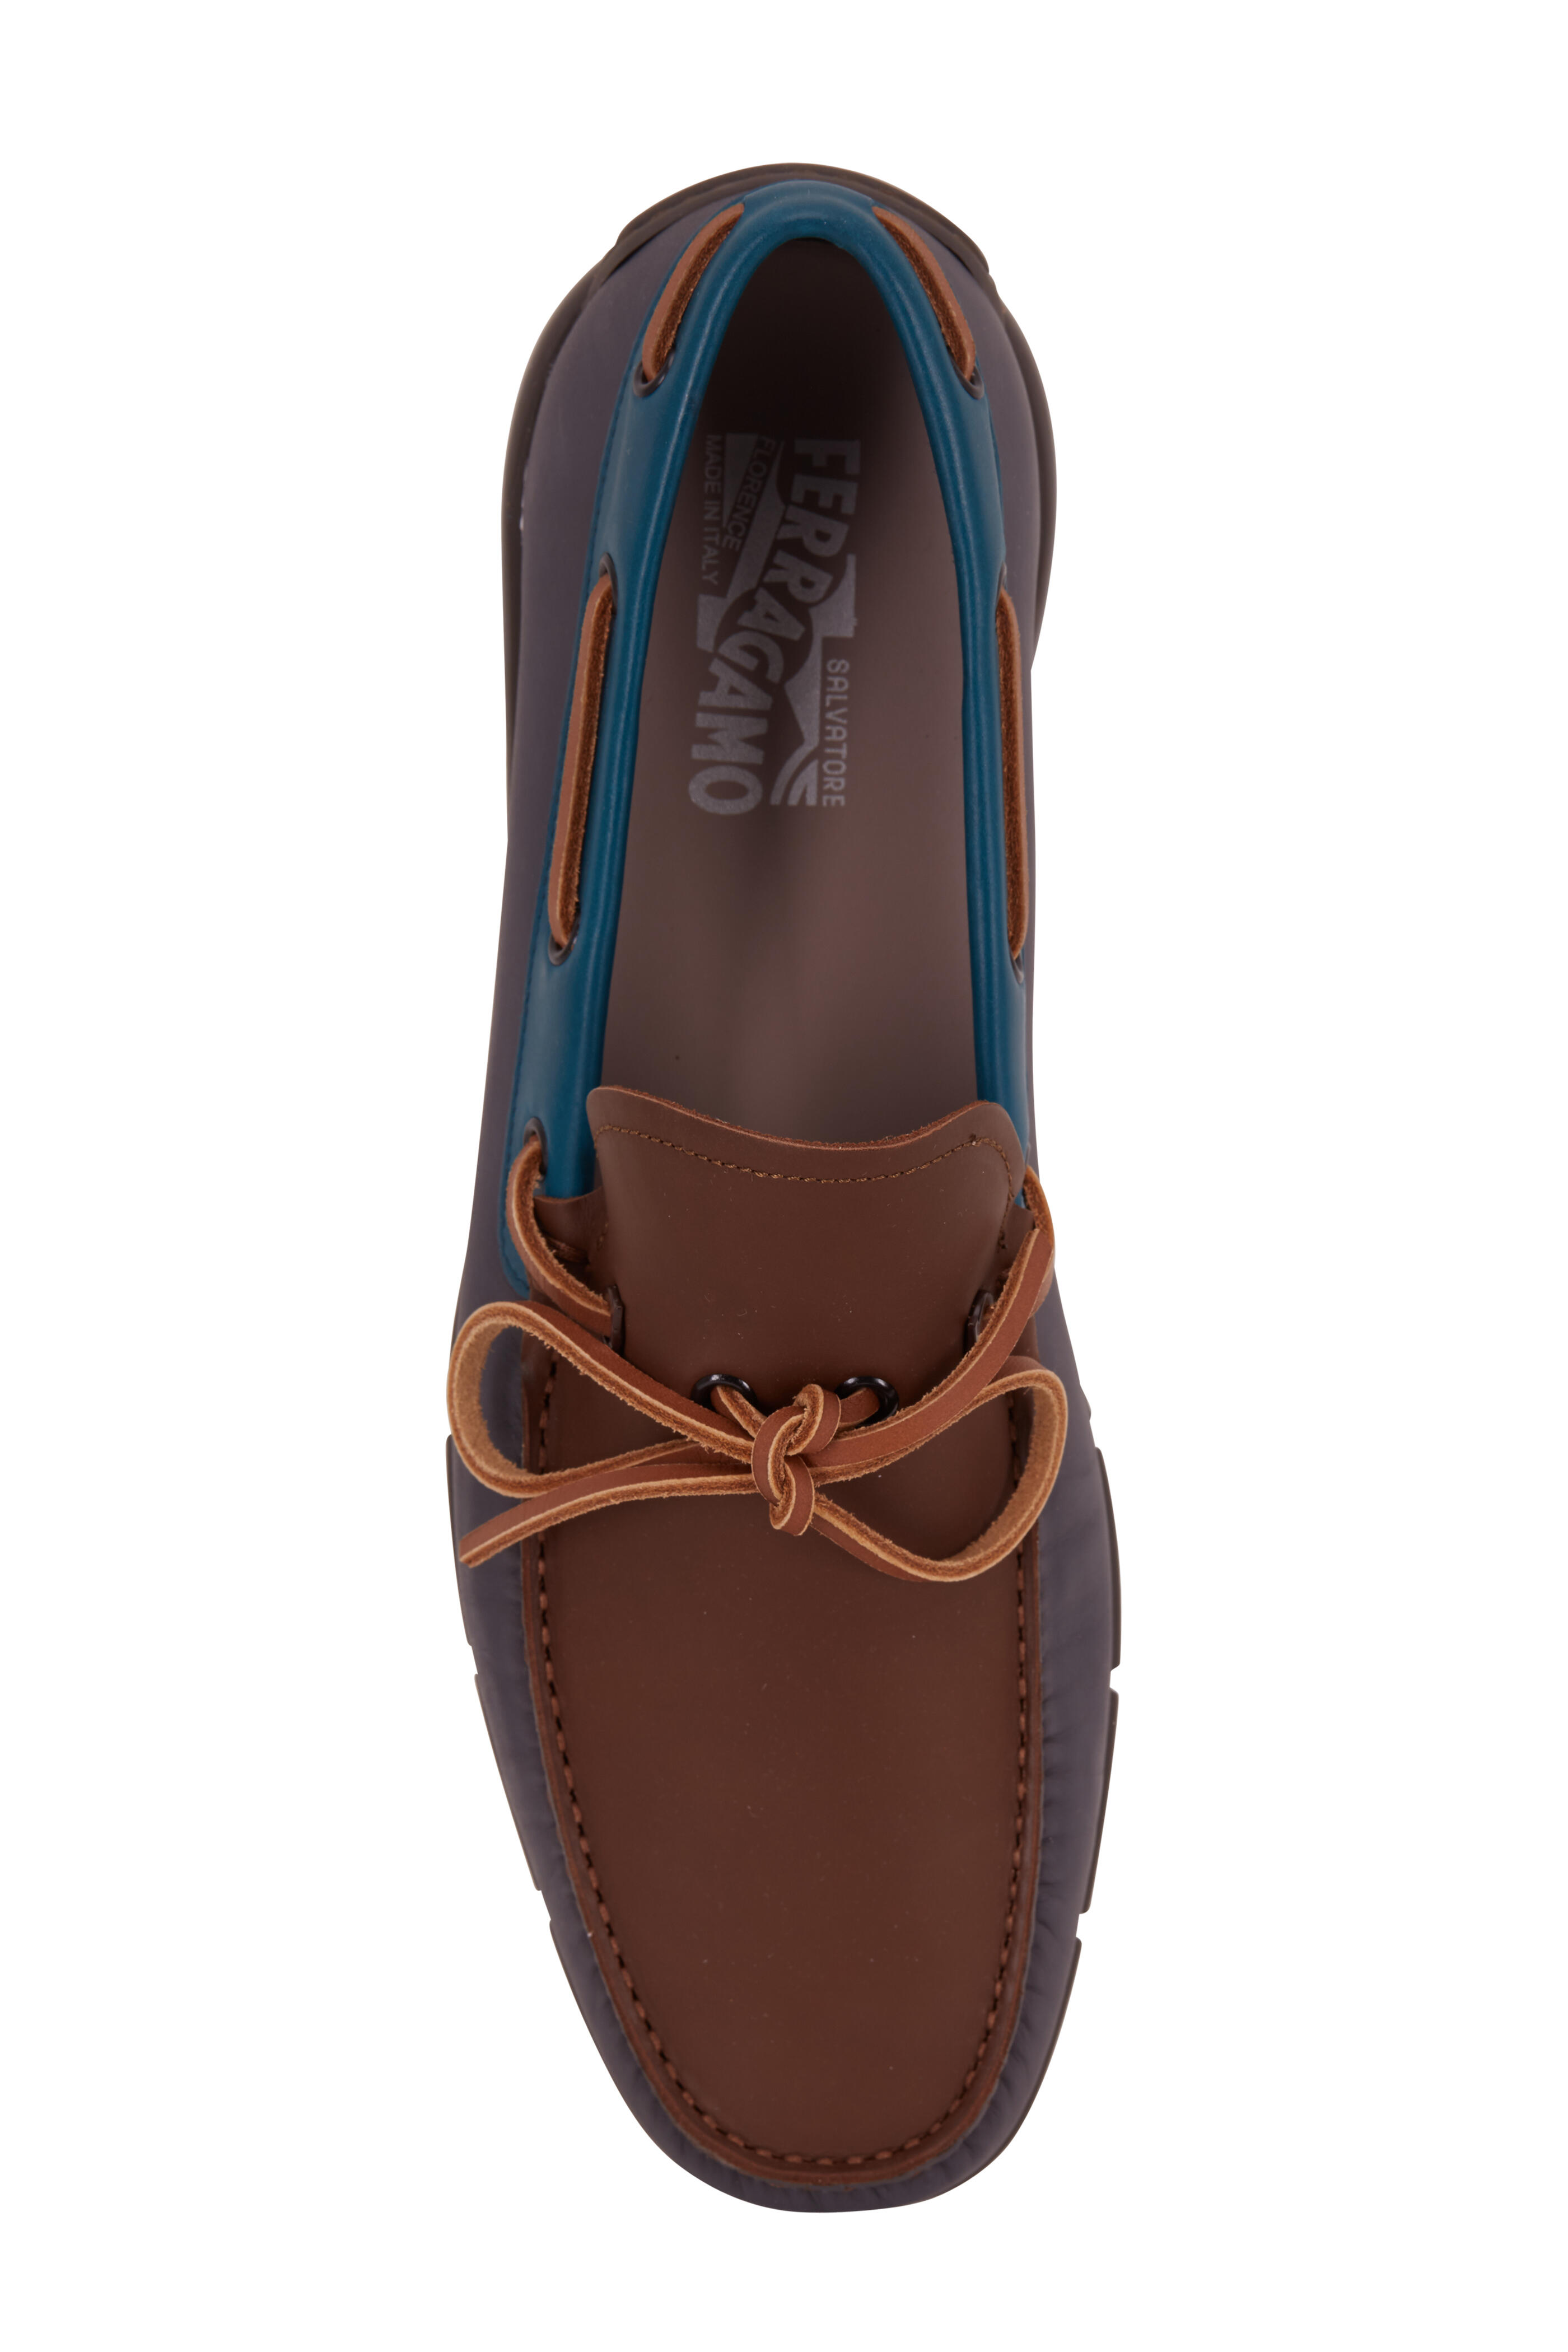 Ferragamo - Simeon Brown & Asphalt Leather Boat Shoe